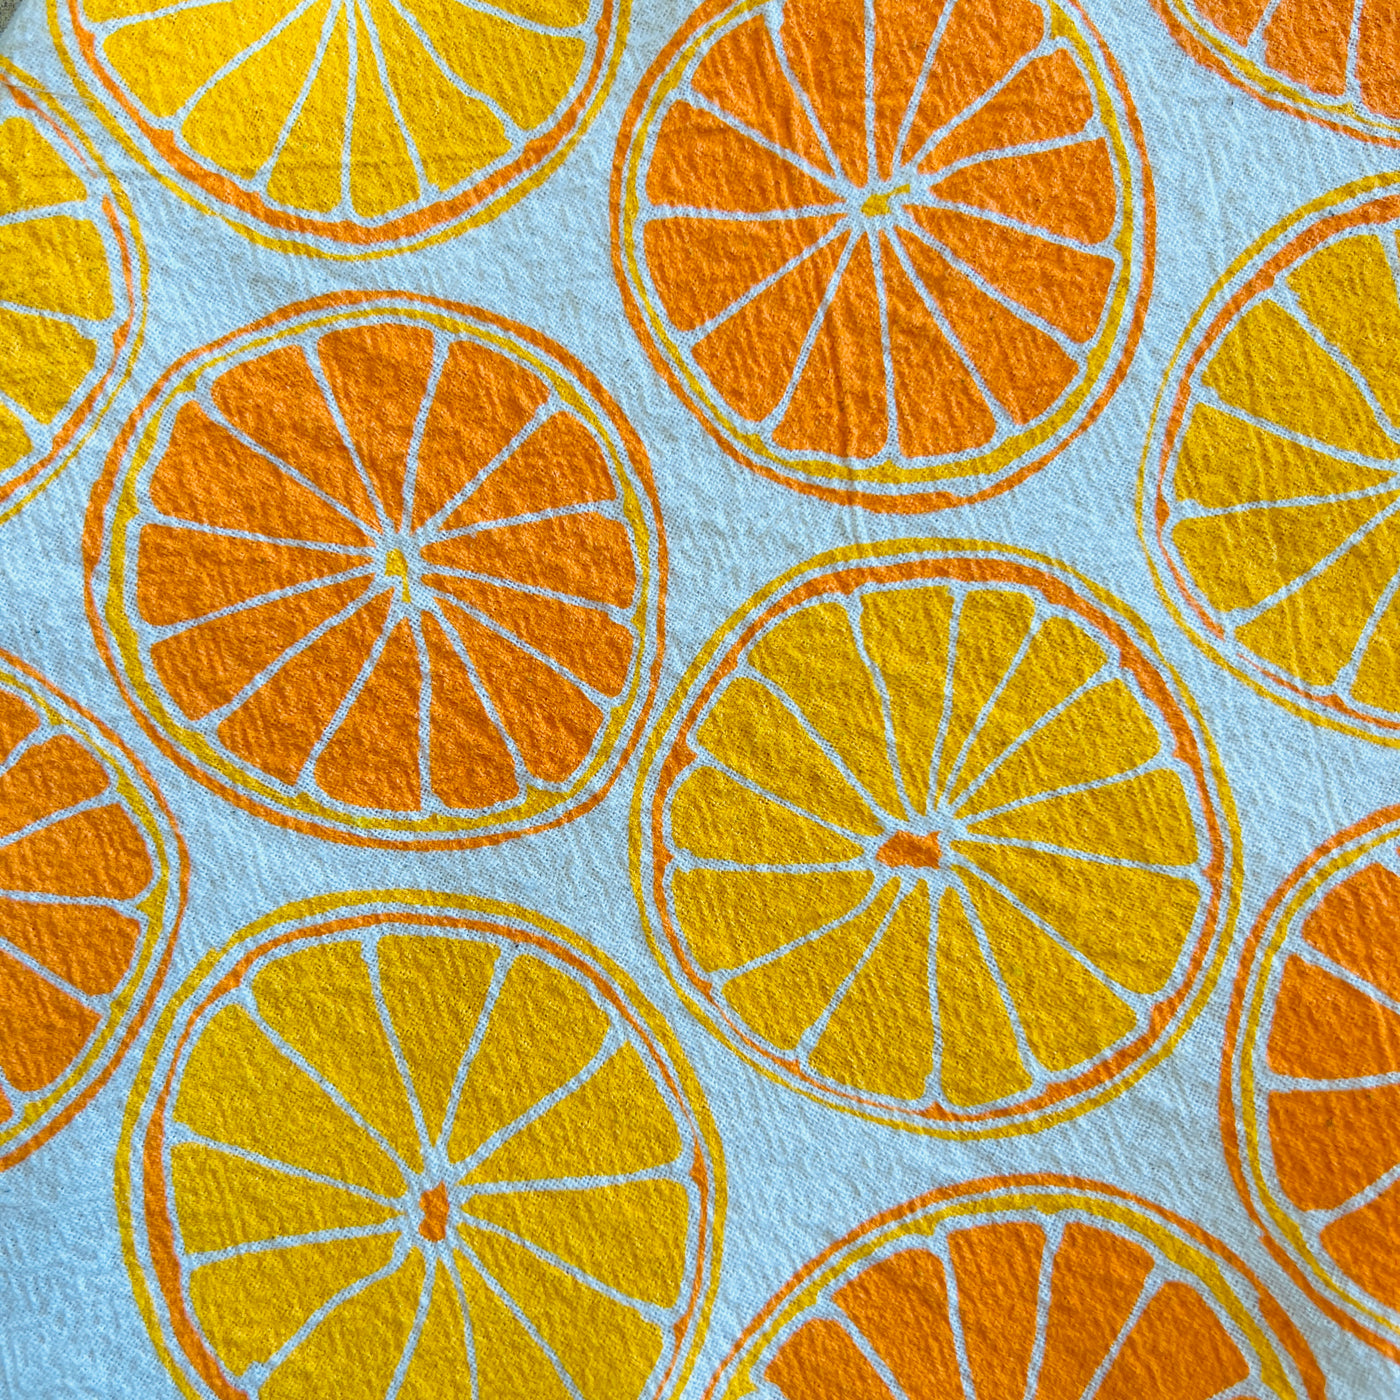 enhanced view of Oranges Tea Towel printed graphic